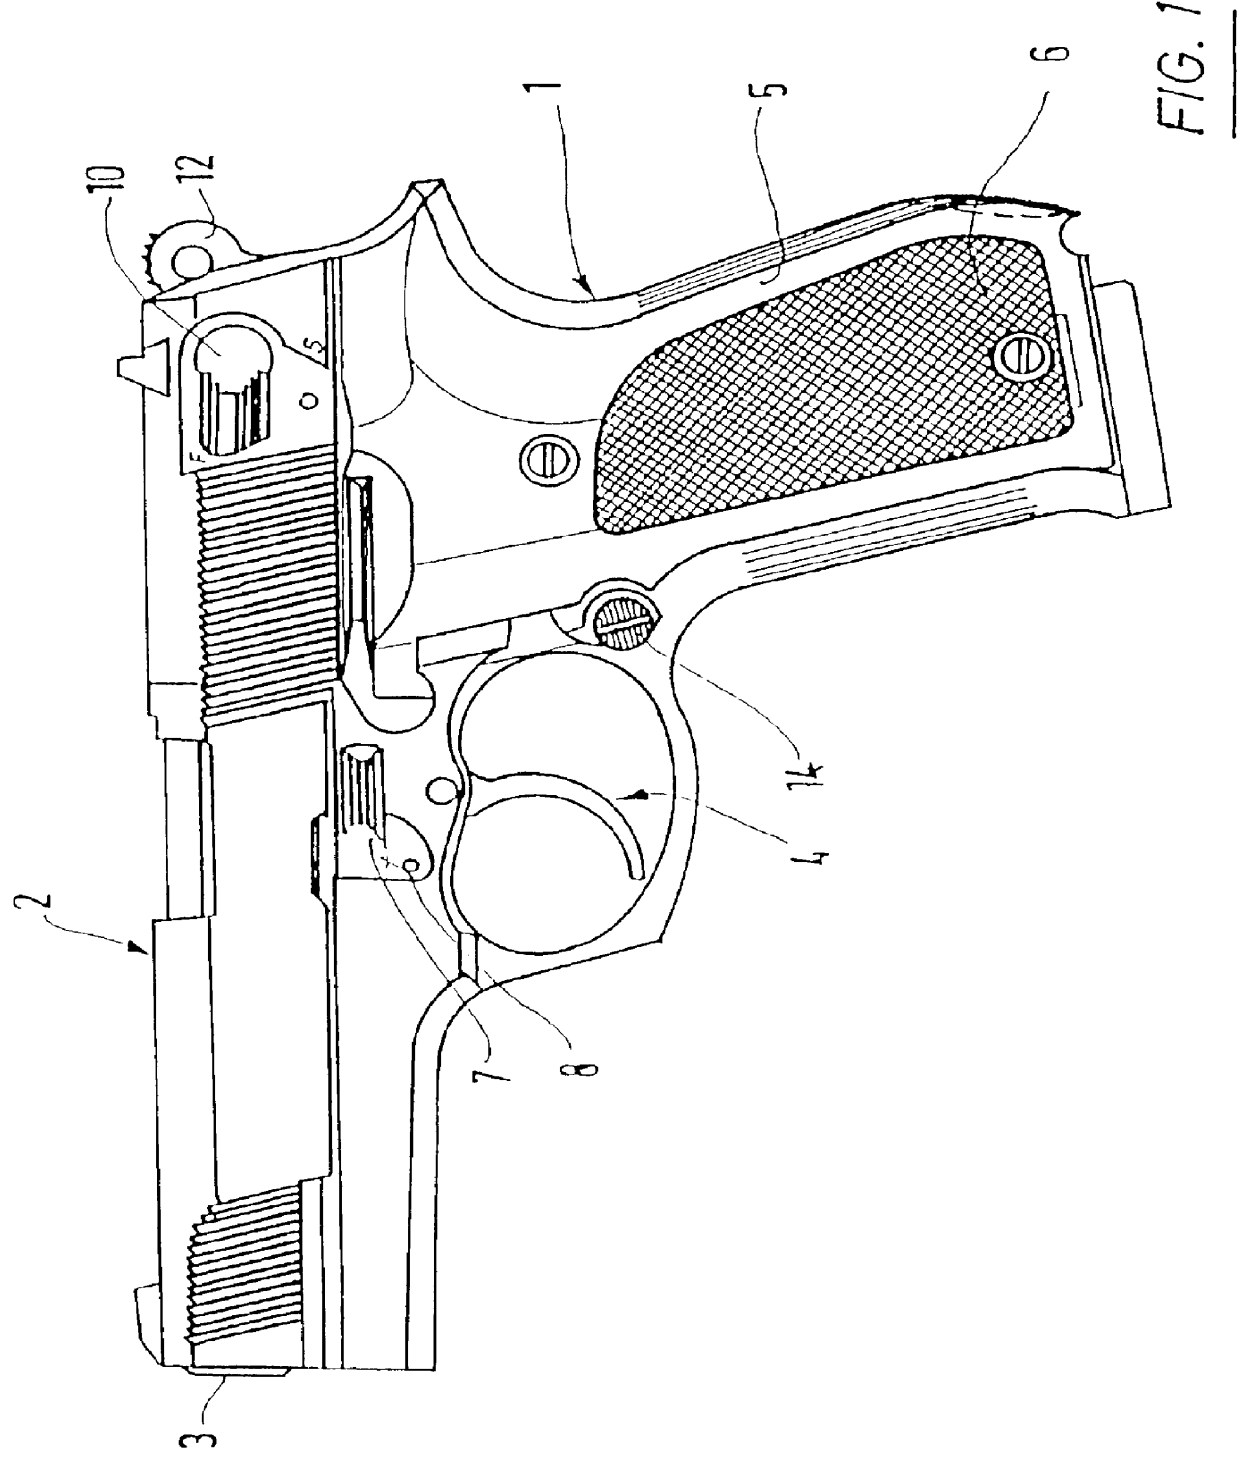 Pressure-operated firearm